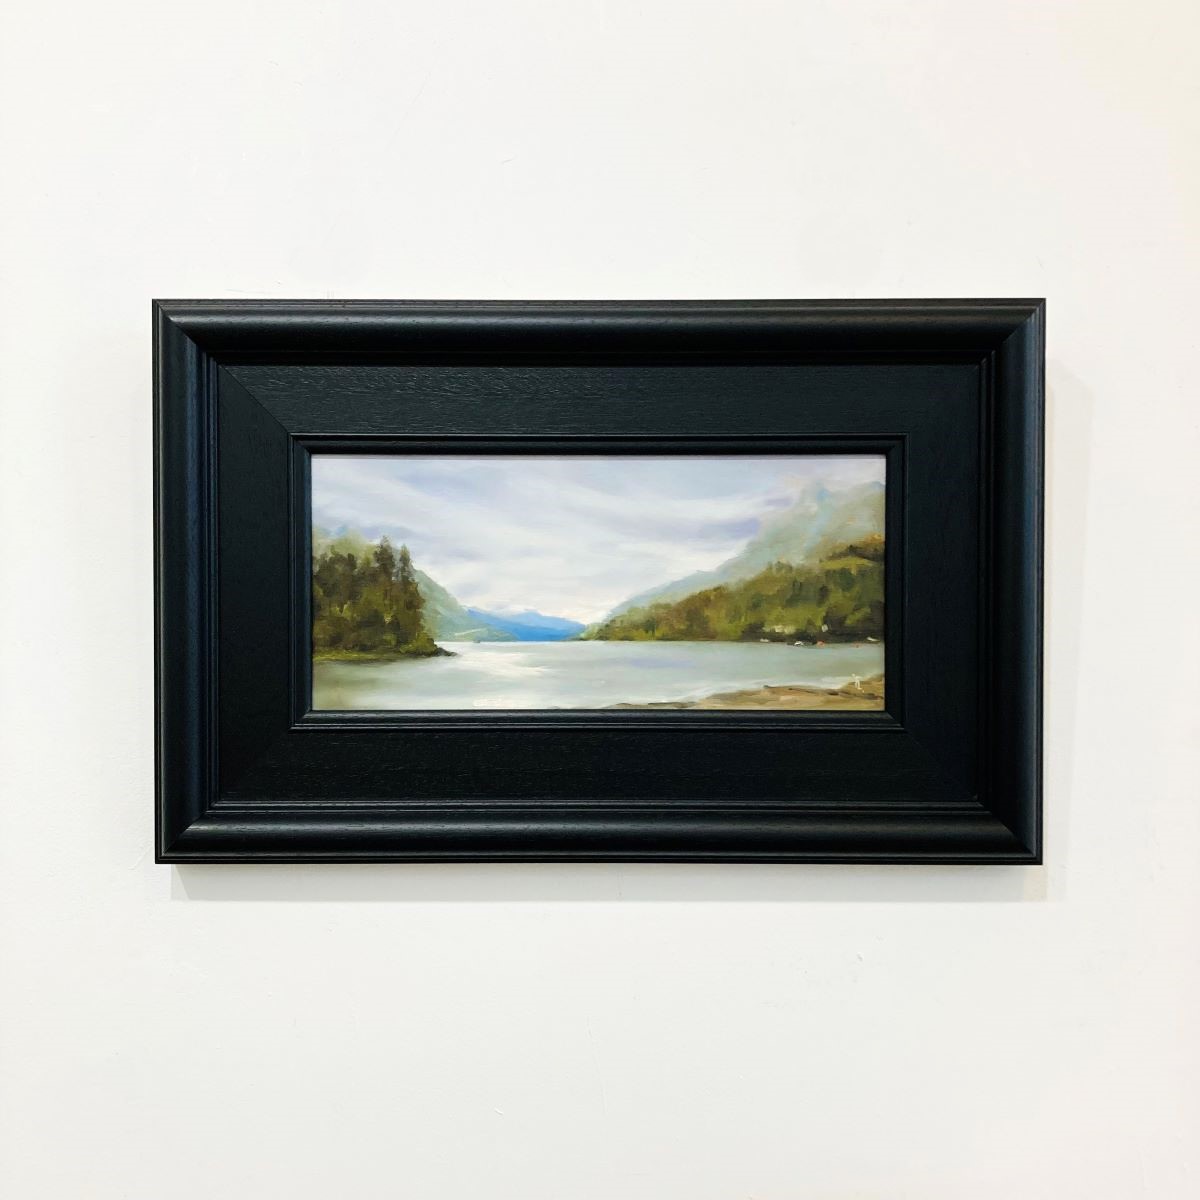 'Serene Loch Shiel' by artist Fiona Longley